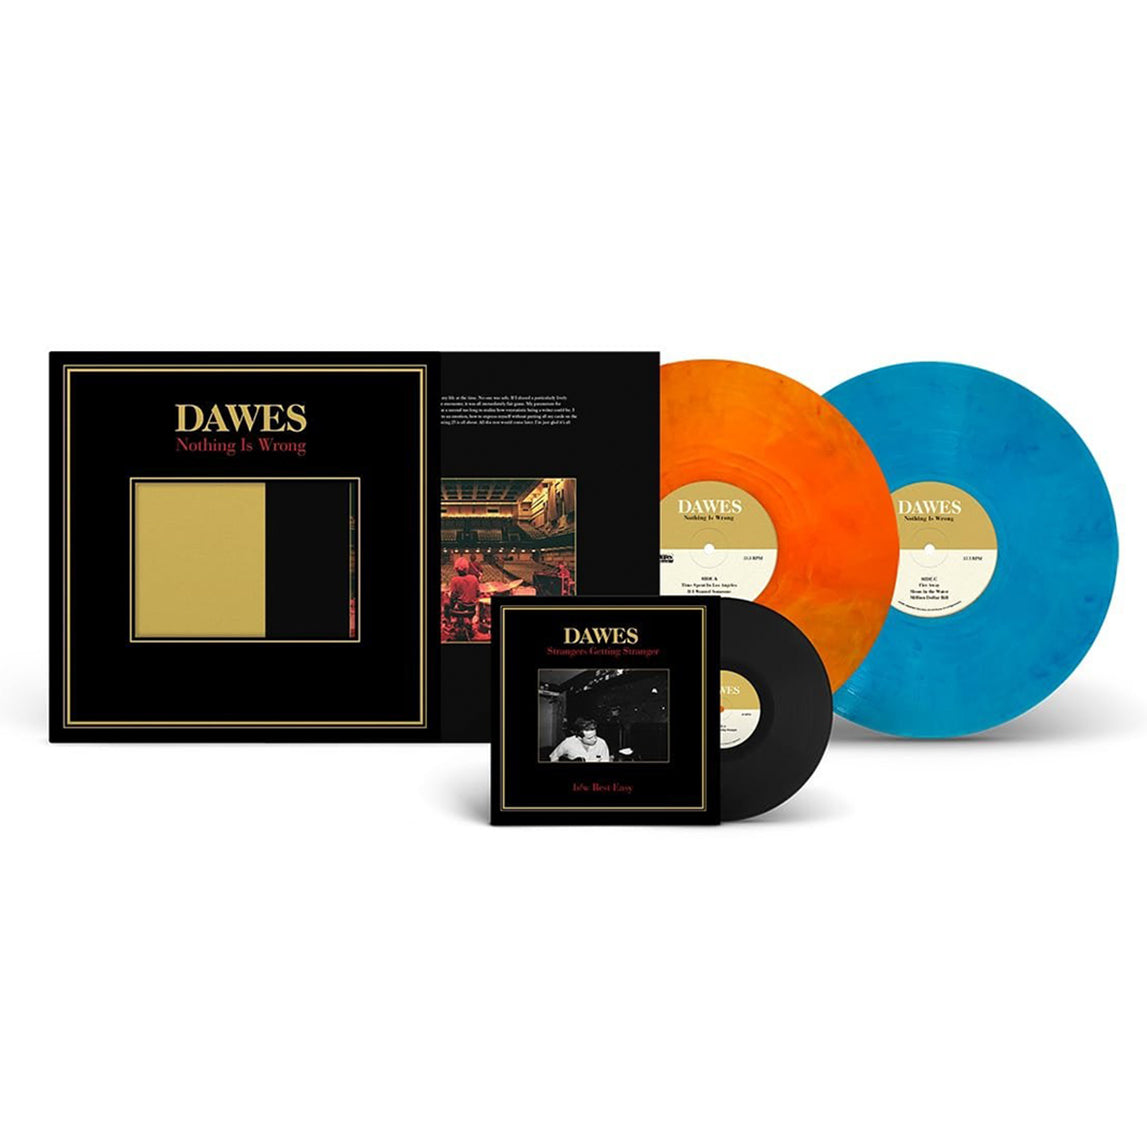 DAWES - Nothing Is Wrong (10th Anniv. Deluxe Ed.) - 2LP + Bonus 7" - LA Sun / Pacific Blue Vinyl [NOV 26]